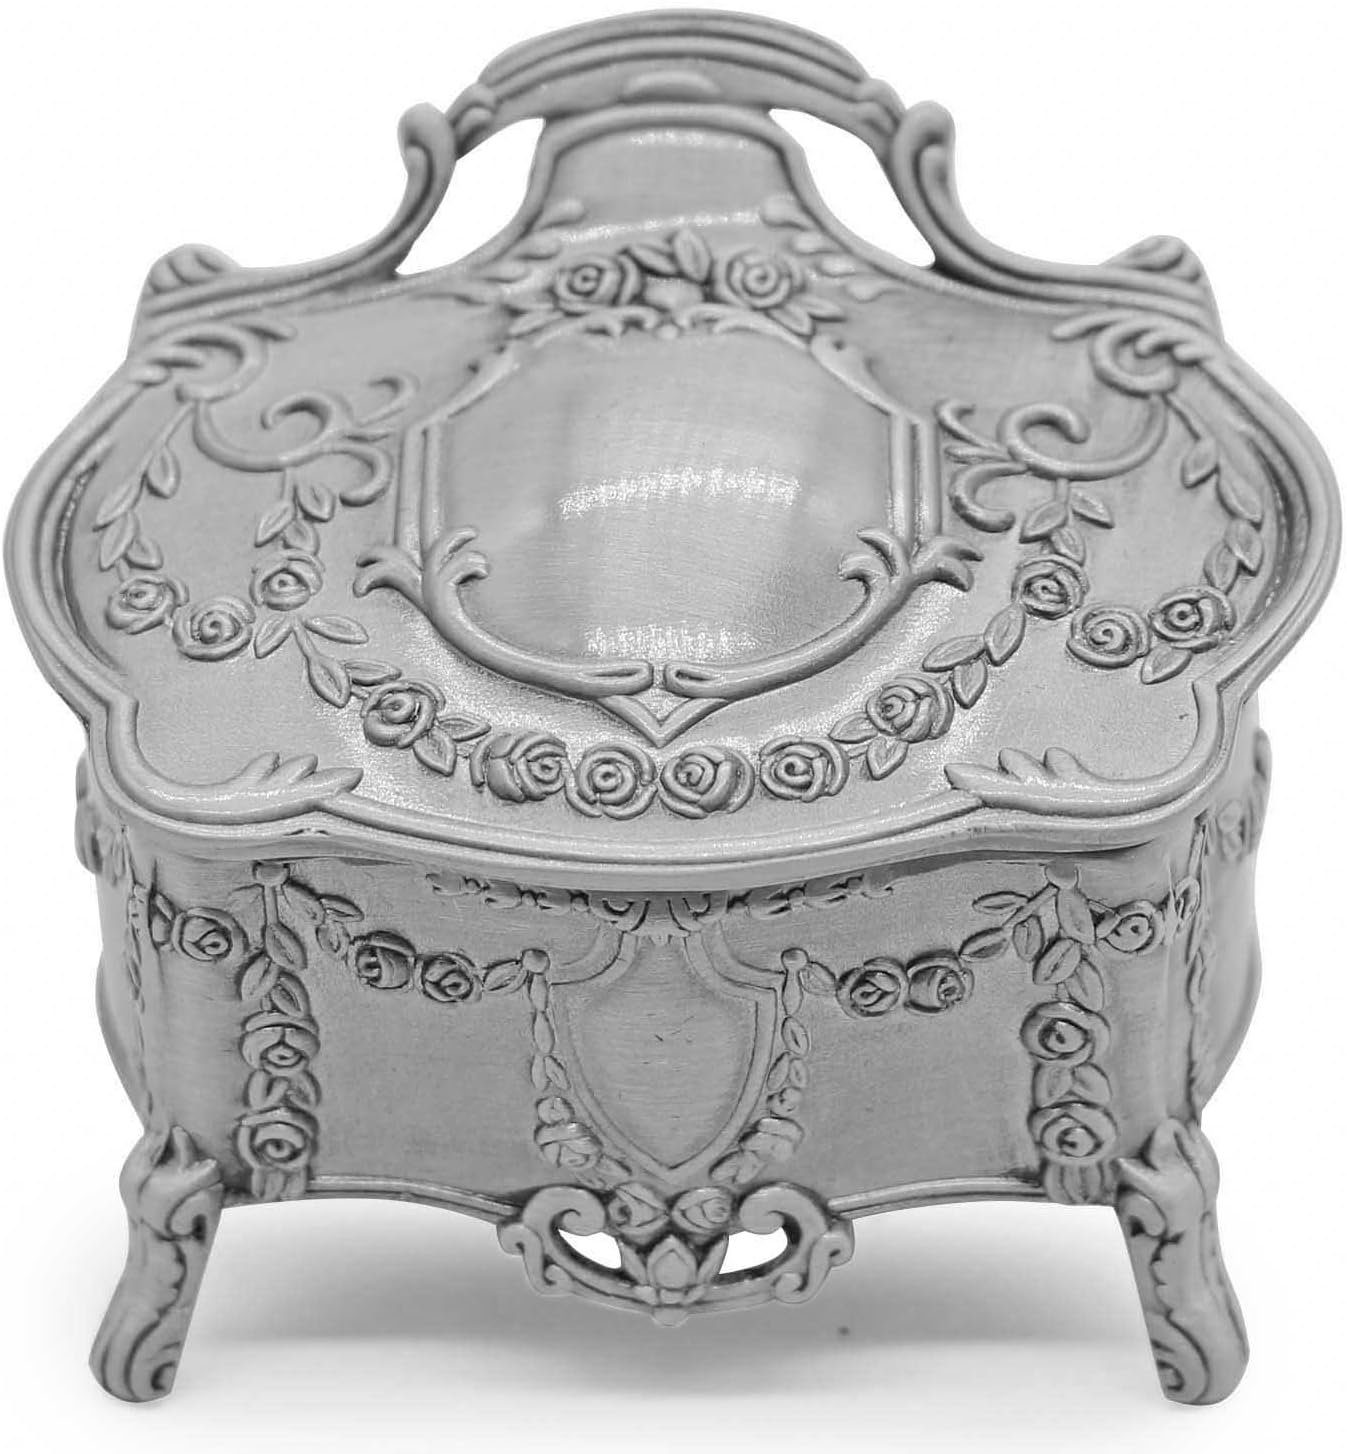 TUABUR Schmuckkasten Rechteckige Silber Metall aus Vintage-Schmuckschatulle